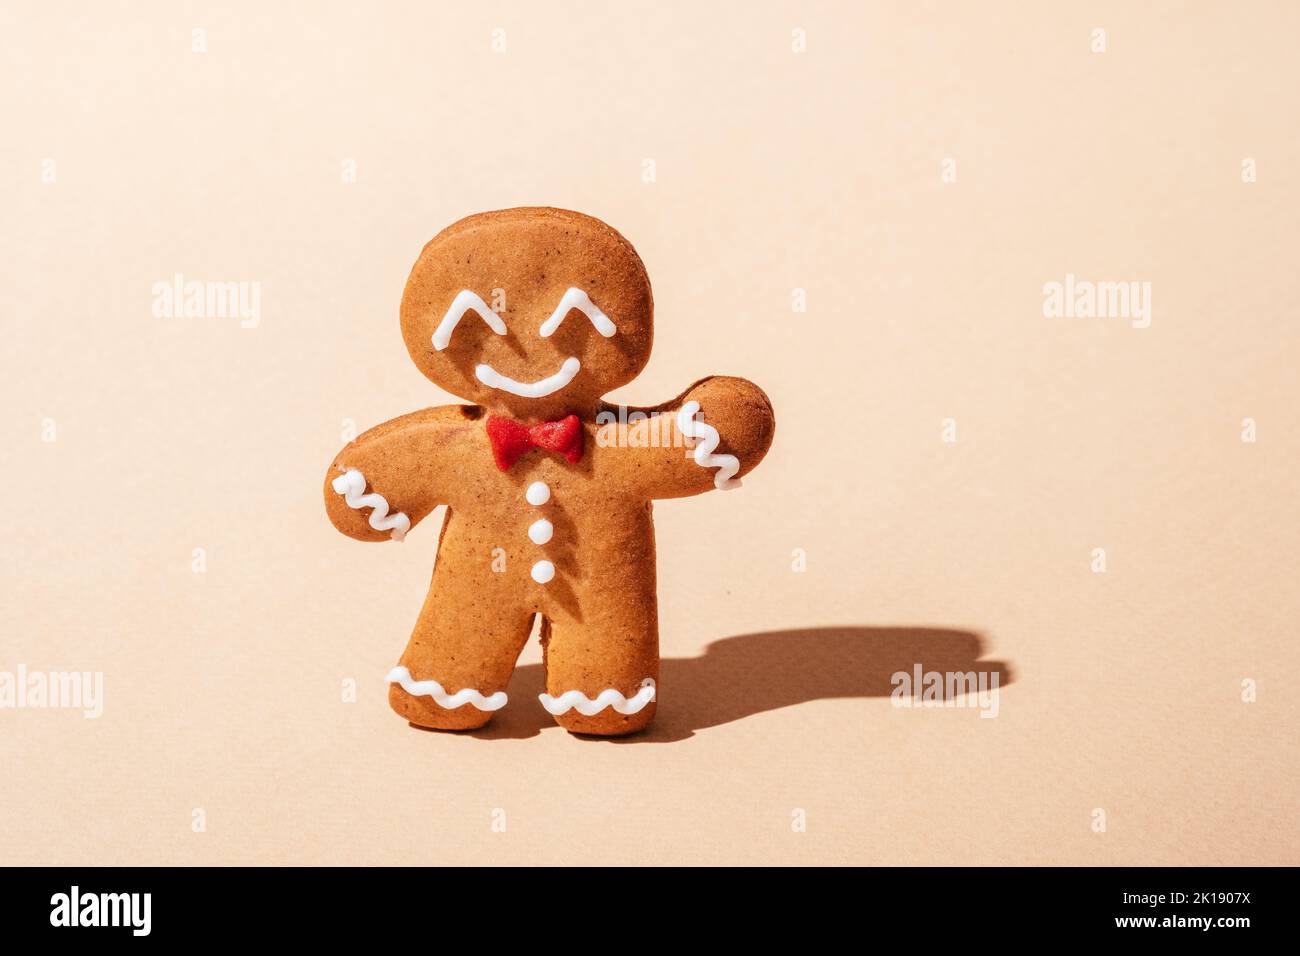 Cute Gingerbread man Stock Photo